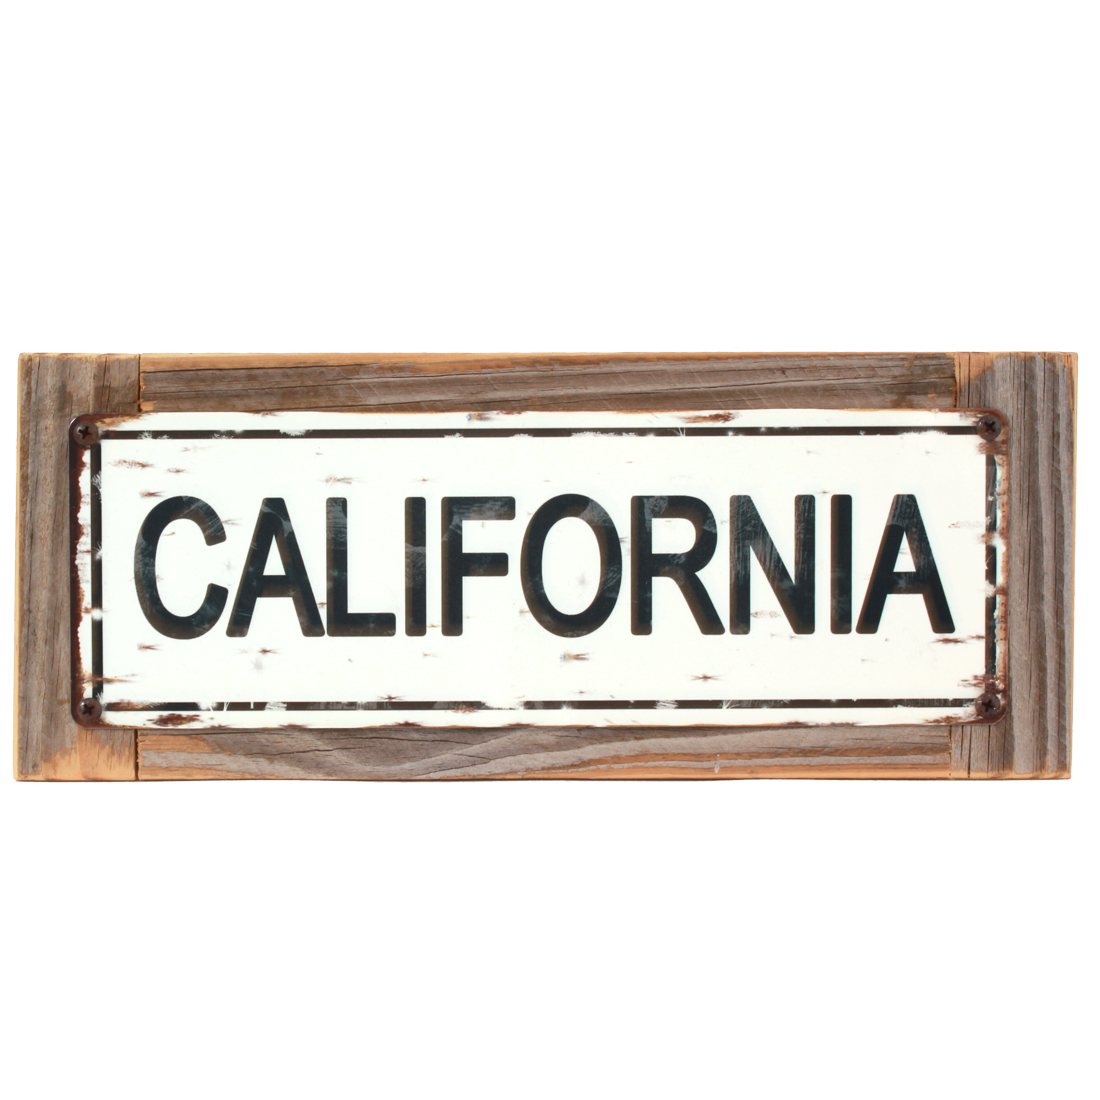 California Rustic Wood and Metal California Destination Sign